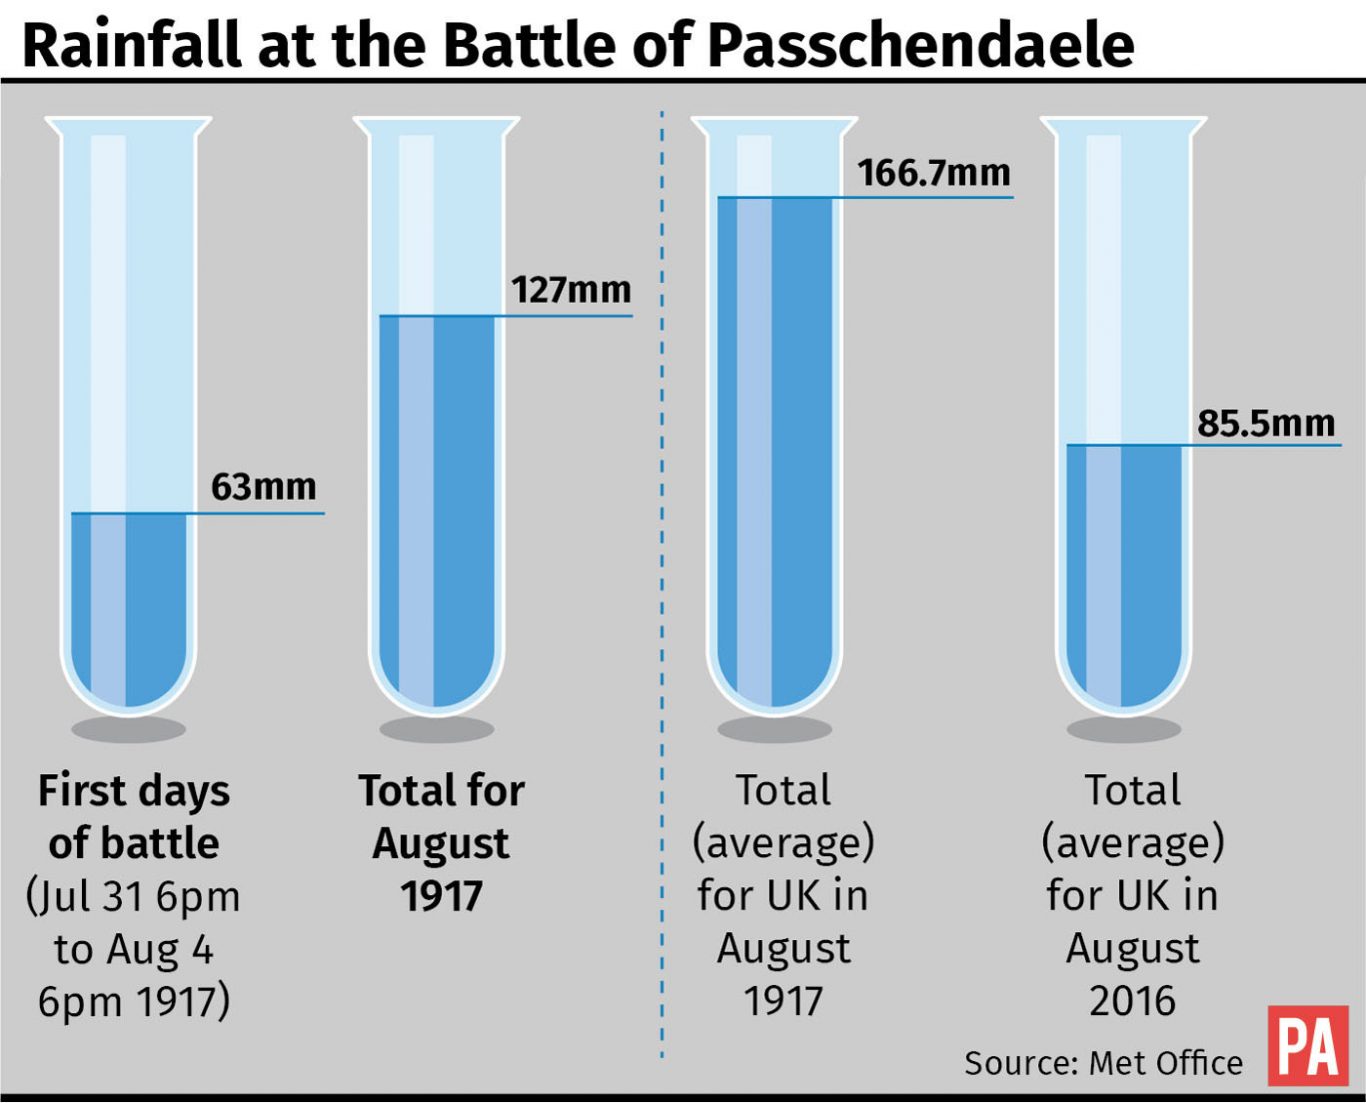 Rainfall at the Battle of Passchendaele